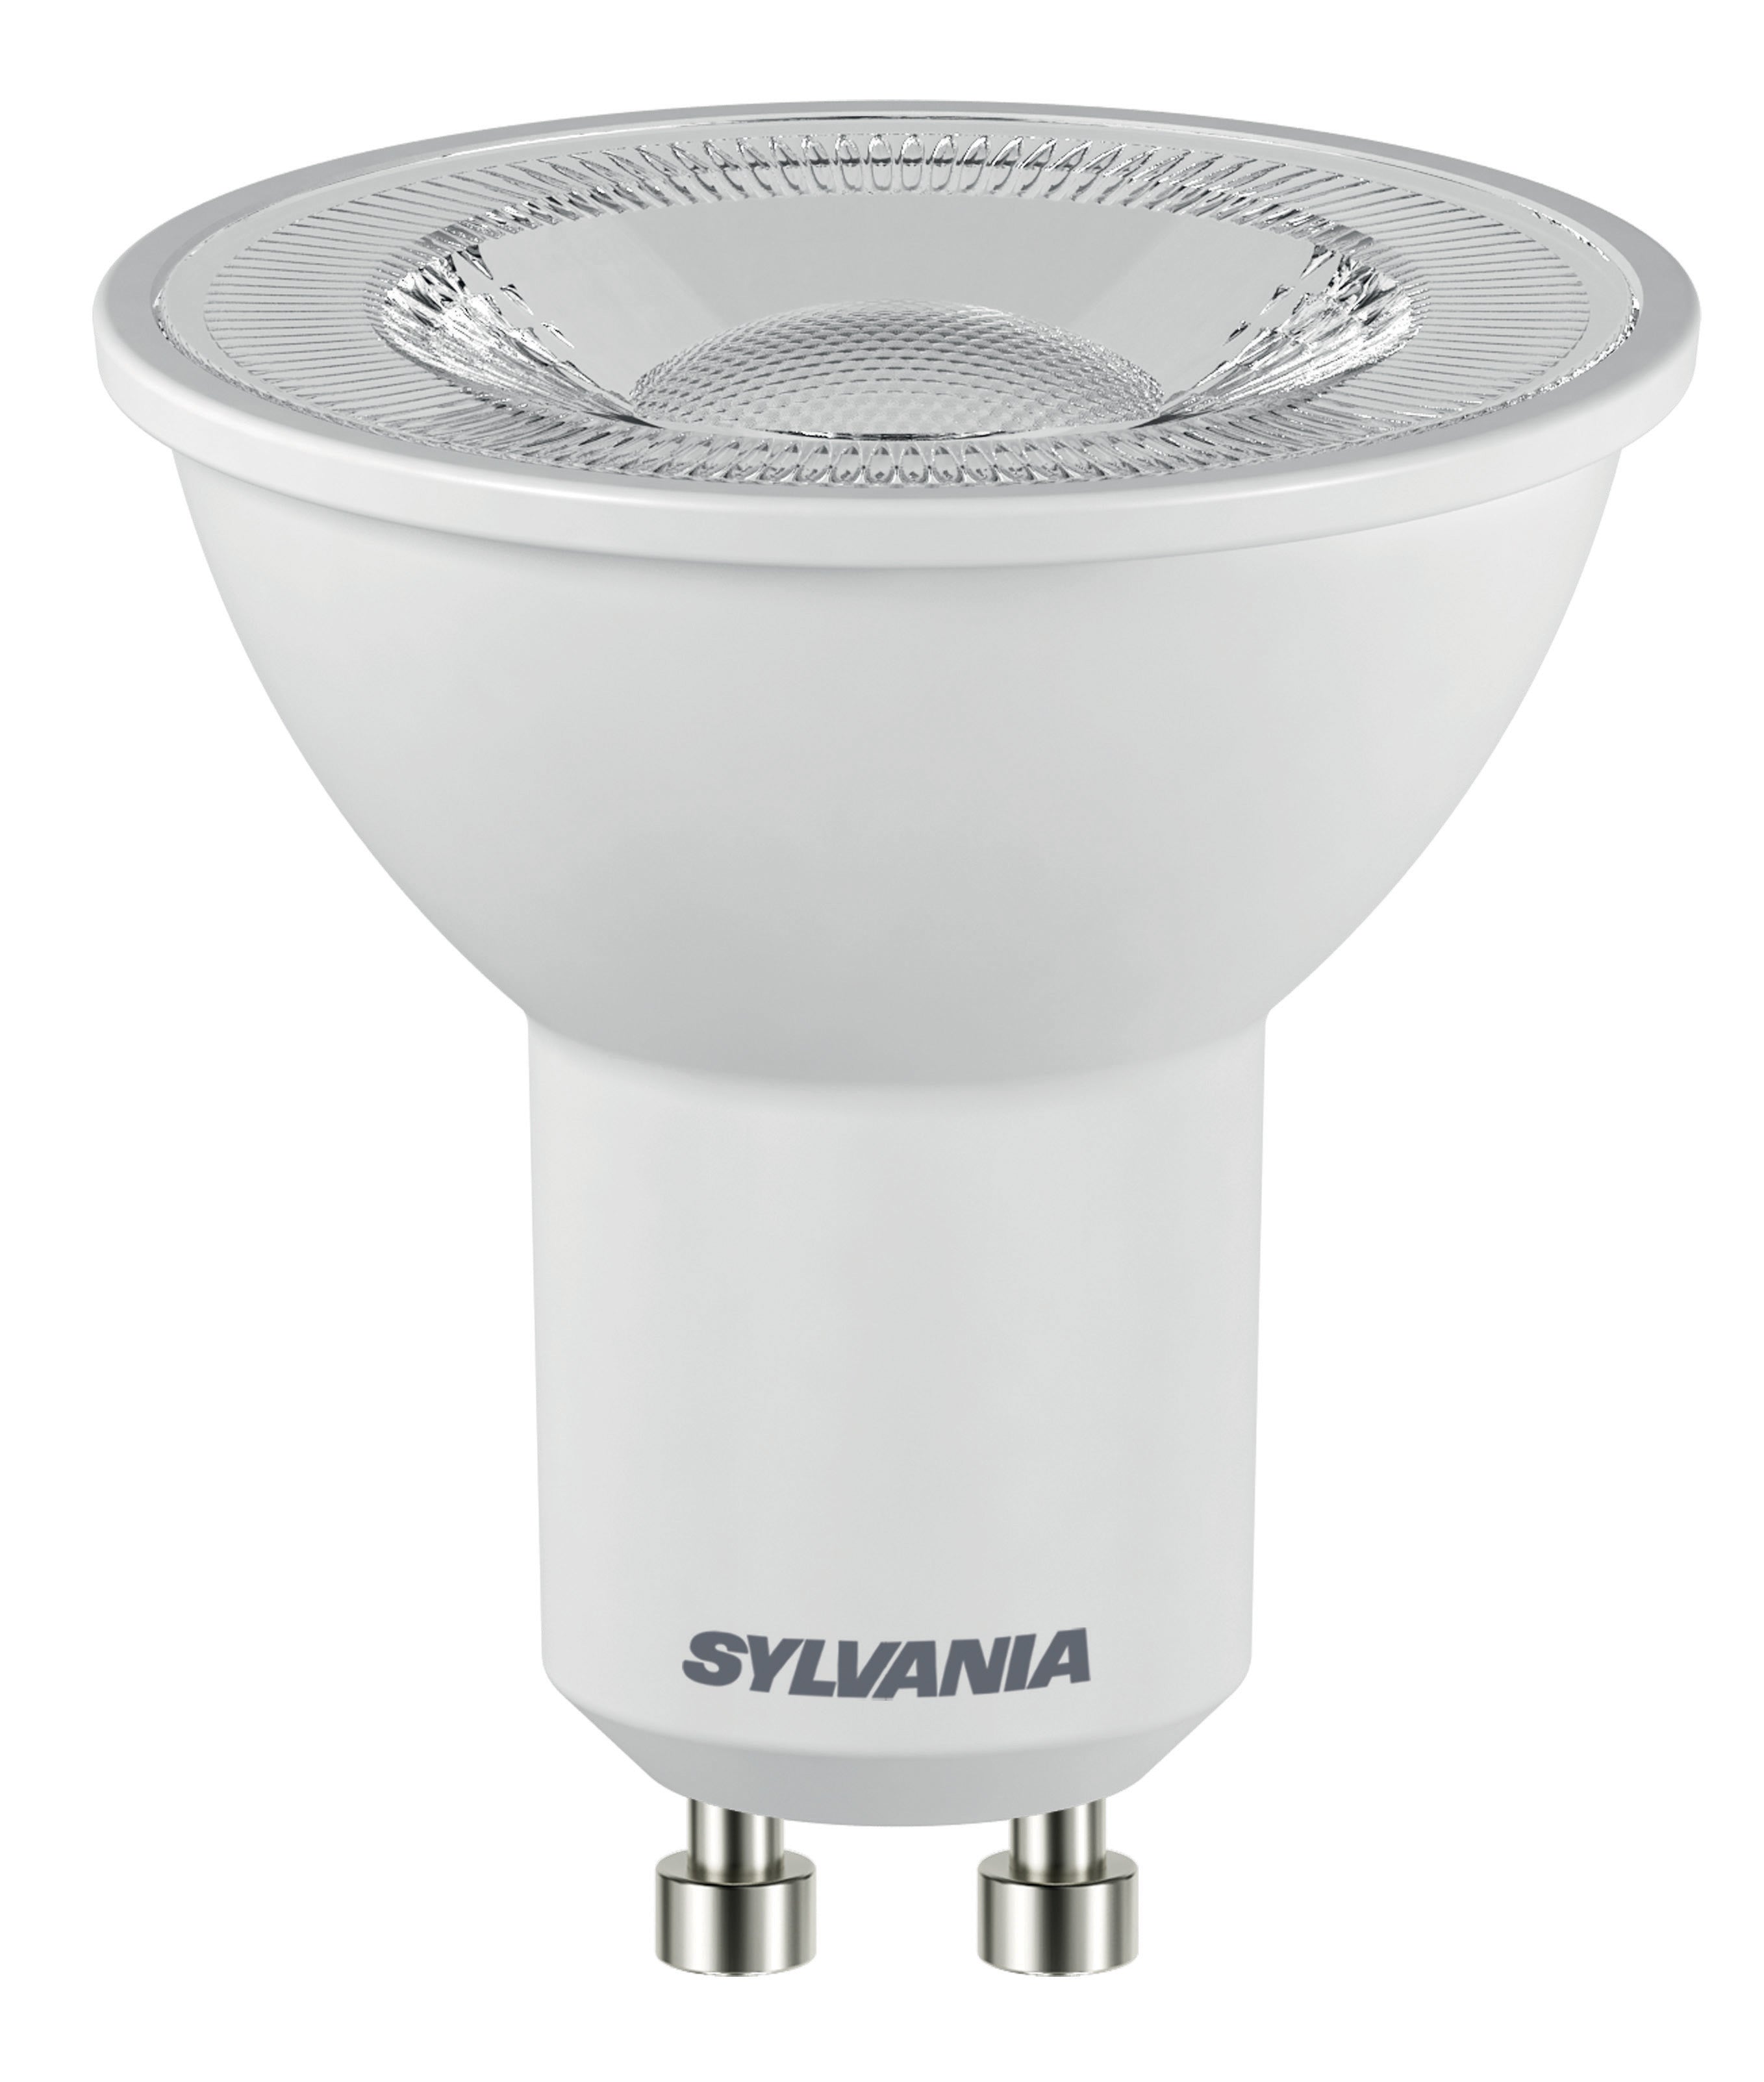 Sylvania 4.2W GU10 Lamp RefLED ES50 V6 345LM Cool White 36 degree - 0029165